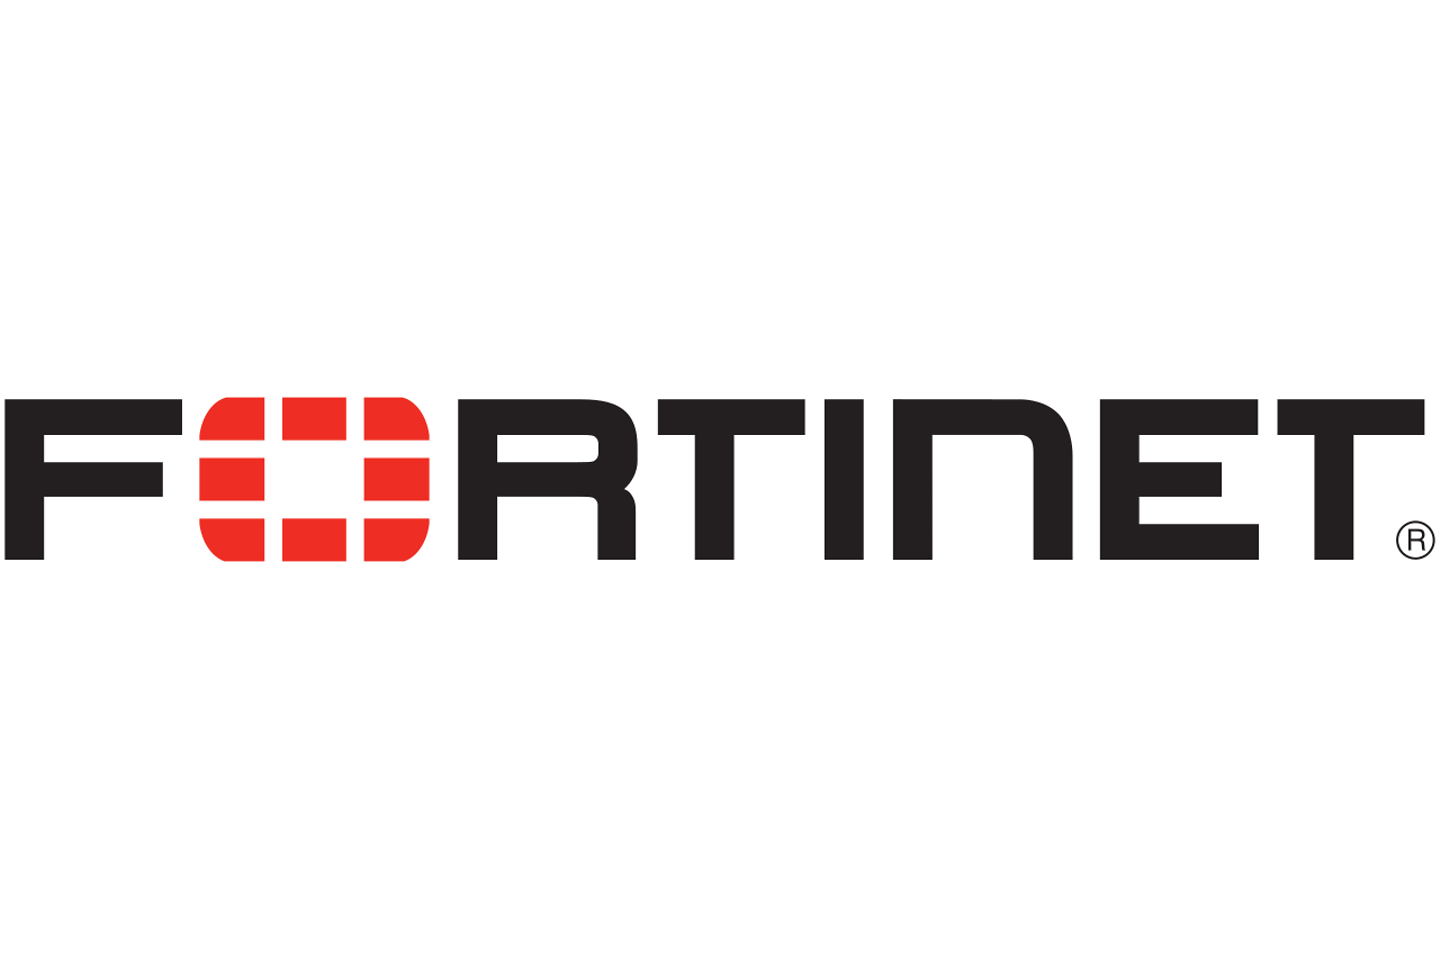 Fortinet logo beneath it